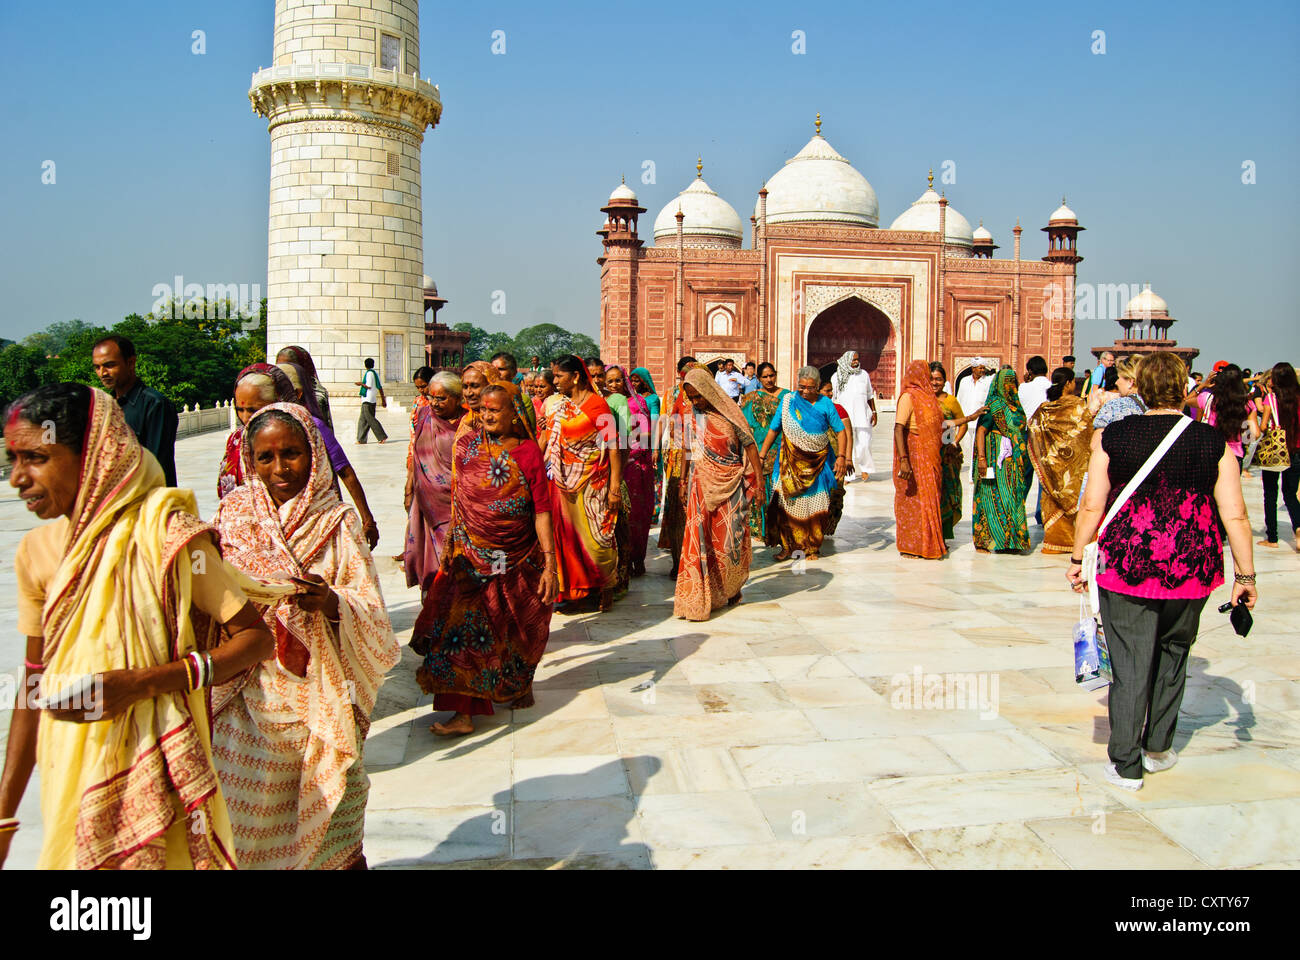 Indian i turisti in visita a Taj Mahal in variopinti costumi tradizionali Foto Stock